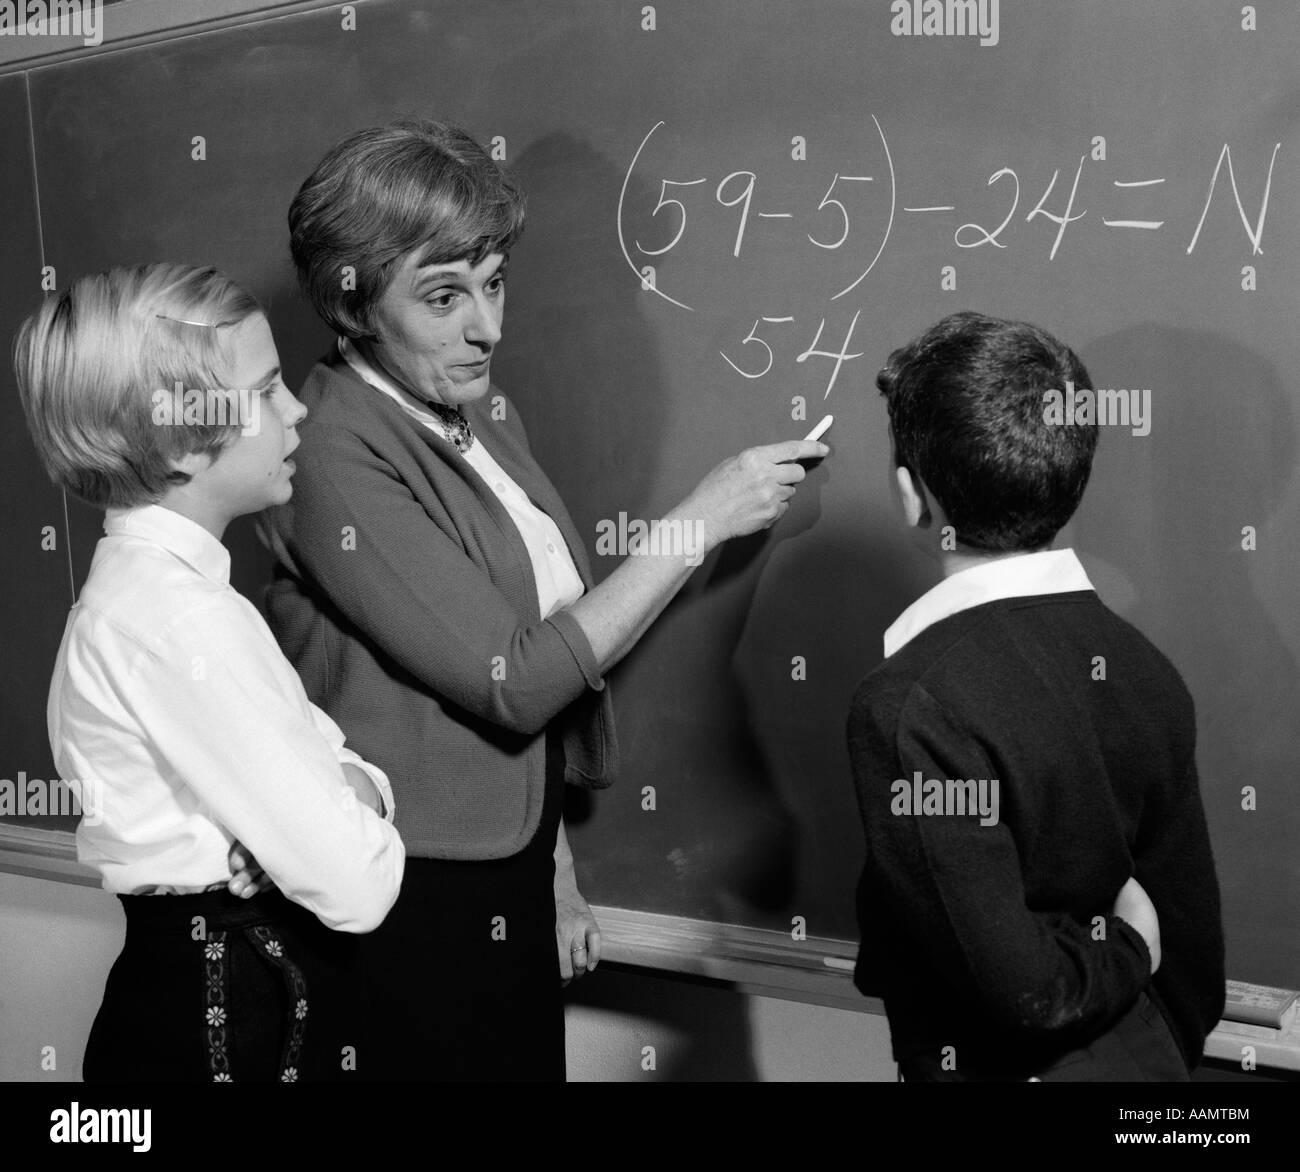 1960s TEACHER AT BLACKBOARD WITH MALE & FEMALE STUDENT EXPLAINING MATH PROBLEM Stock Photo